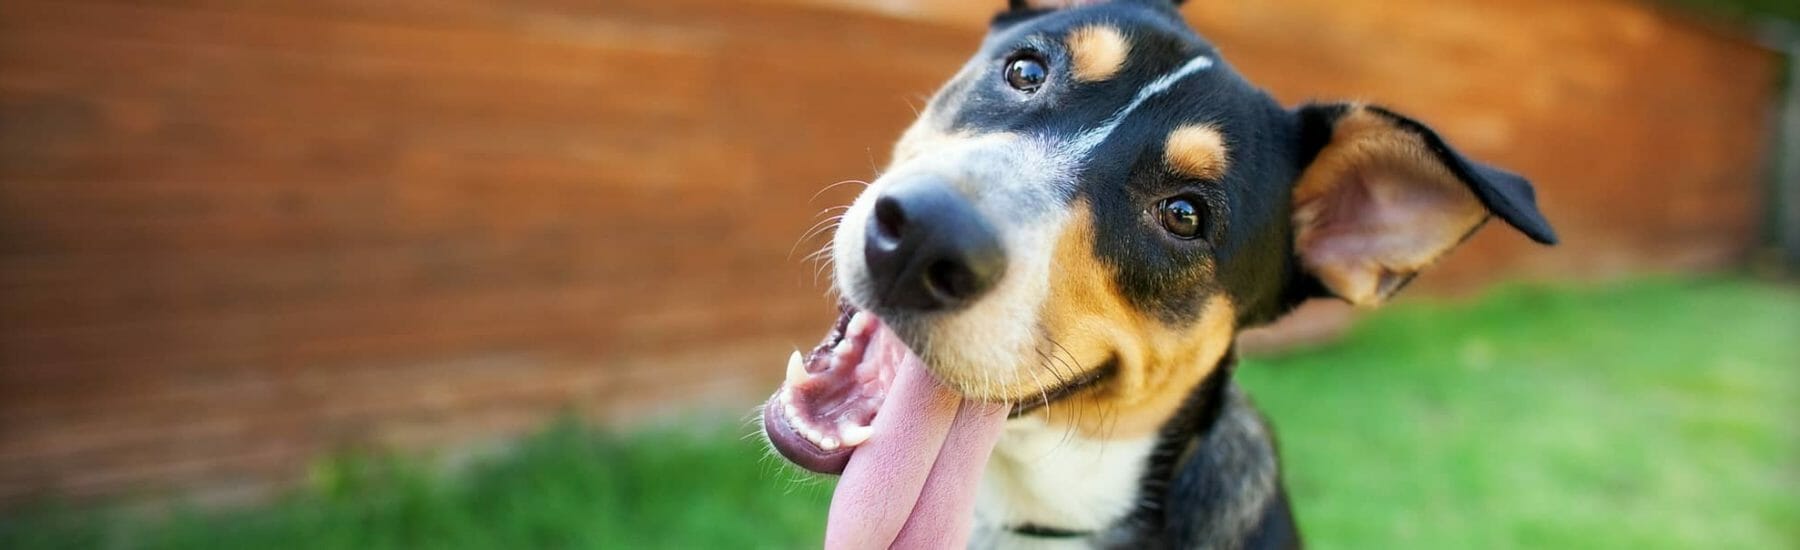 Black and orange dog dog sticking tongue out of mouth